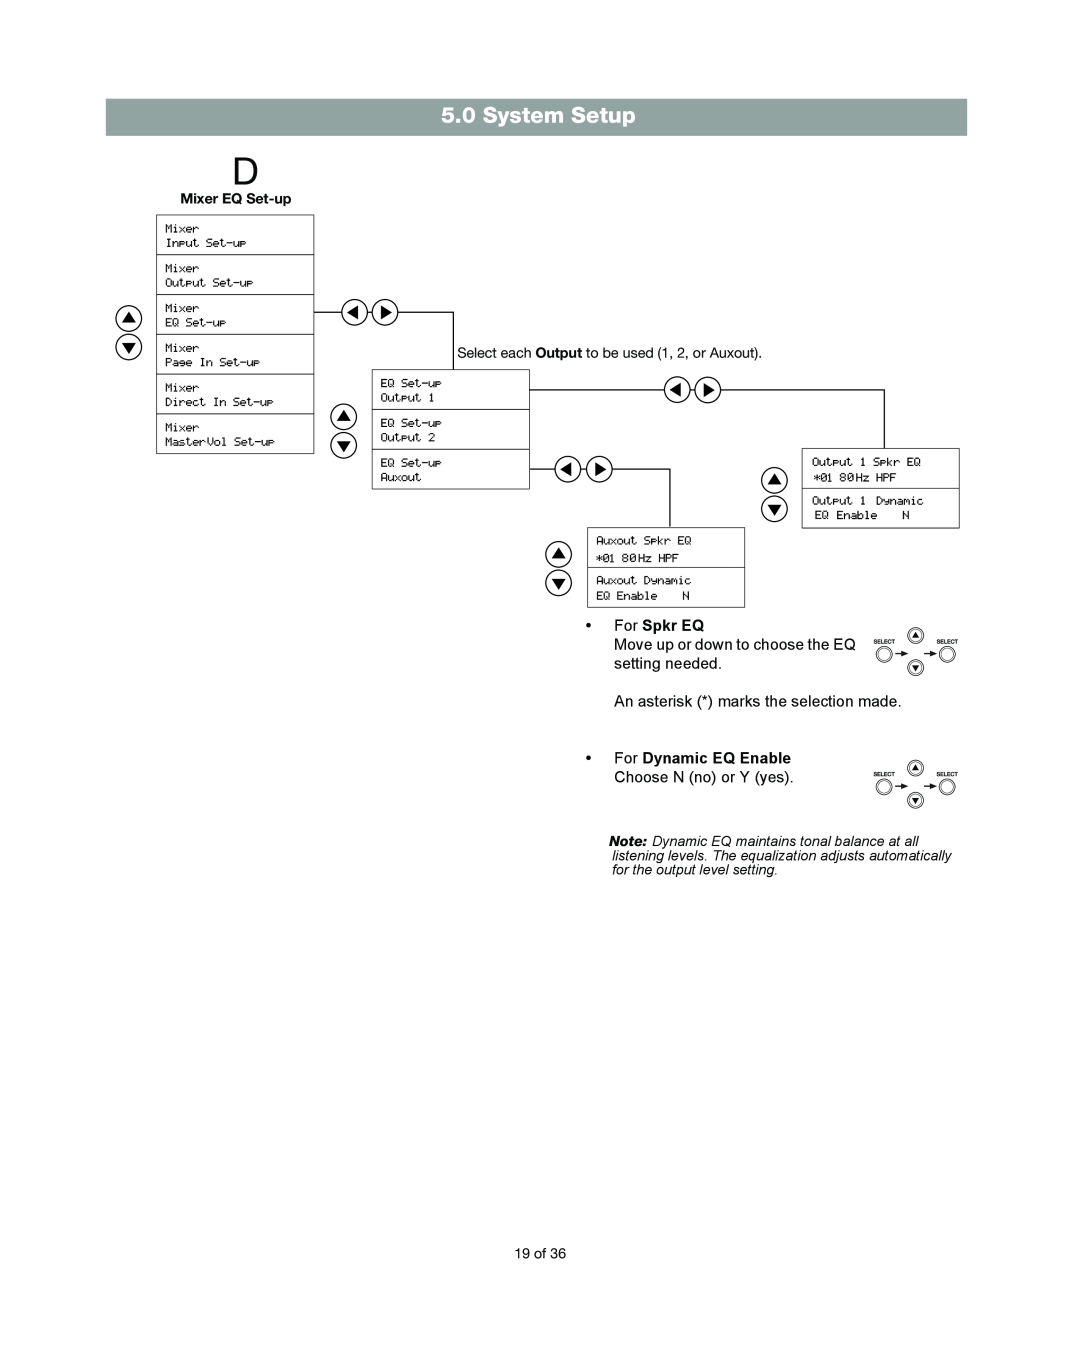 Bose DXA2120 manual System Setup, For Spkr EQ, For Dynamic EQ Enable Choose N no or Y yes 